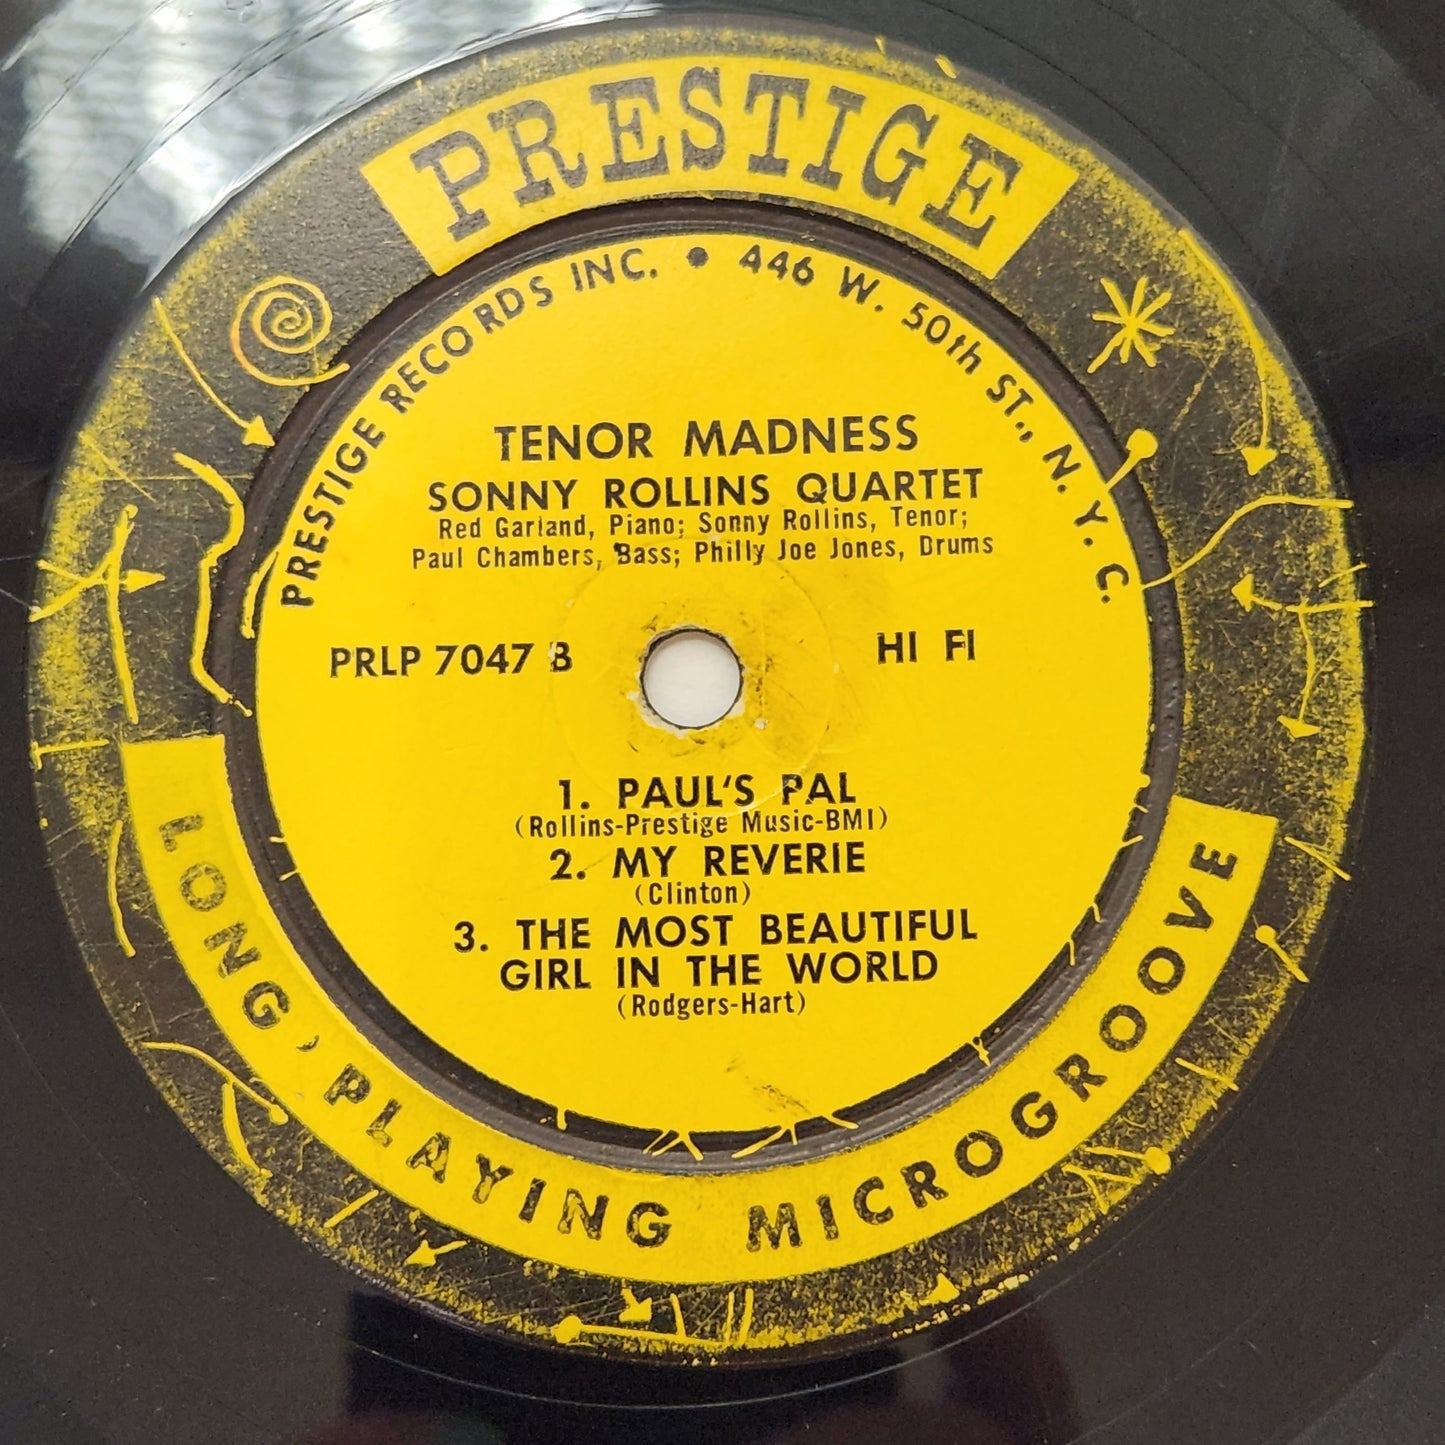 Sonny Rolling Quartet "Tenor Madness" Original 1956 Pressing Jazz Album (Prestige Records)